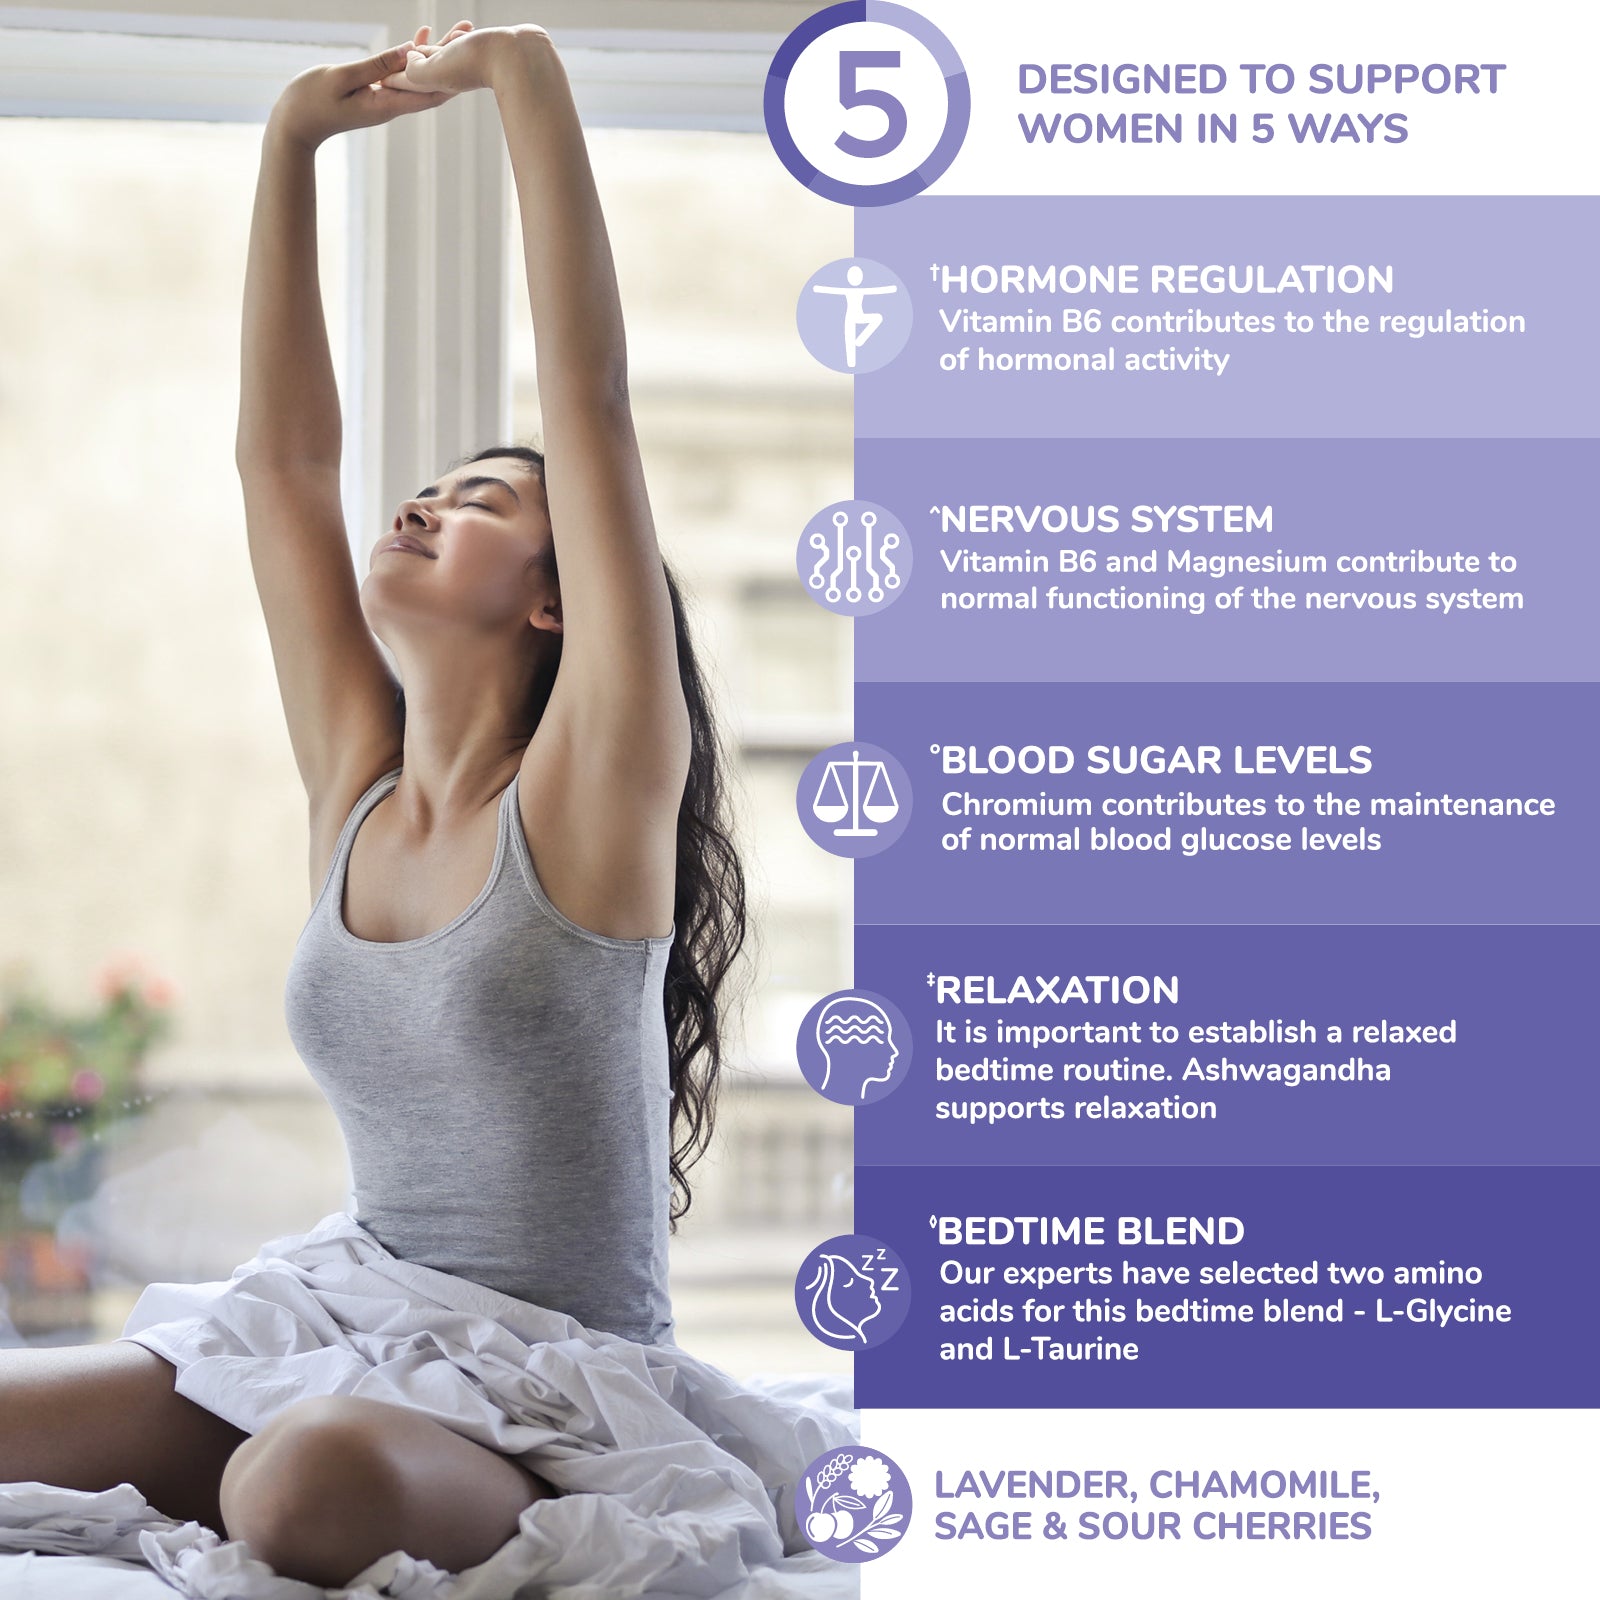 Health & Her Sleep+ Multi-Nutrient Supplement Health & Her